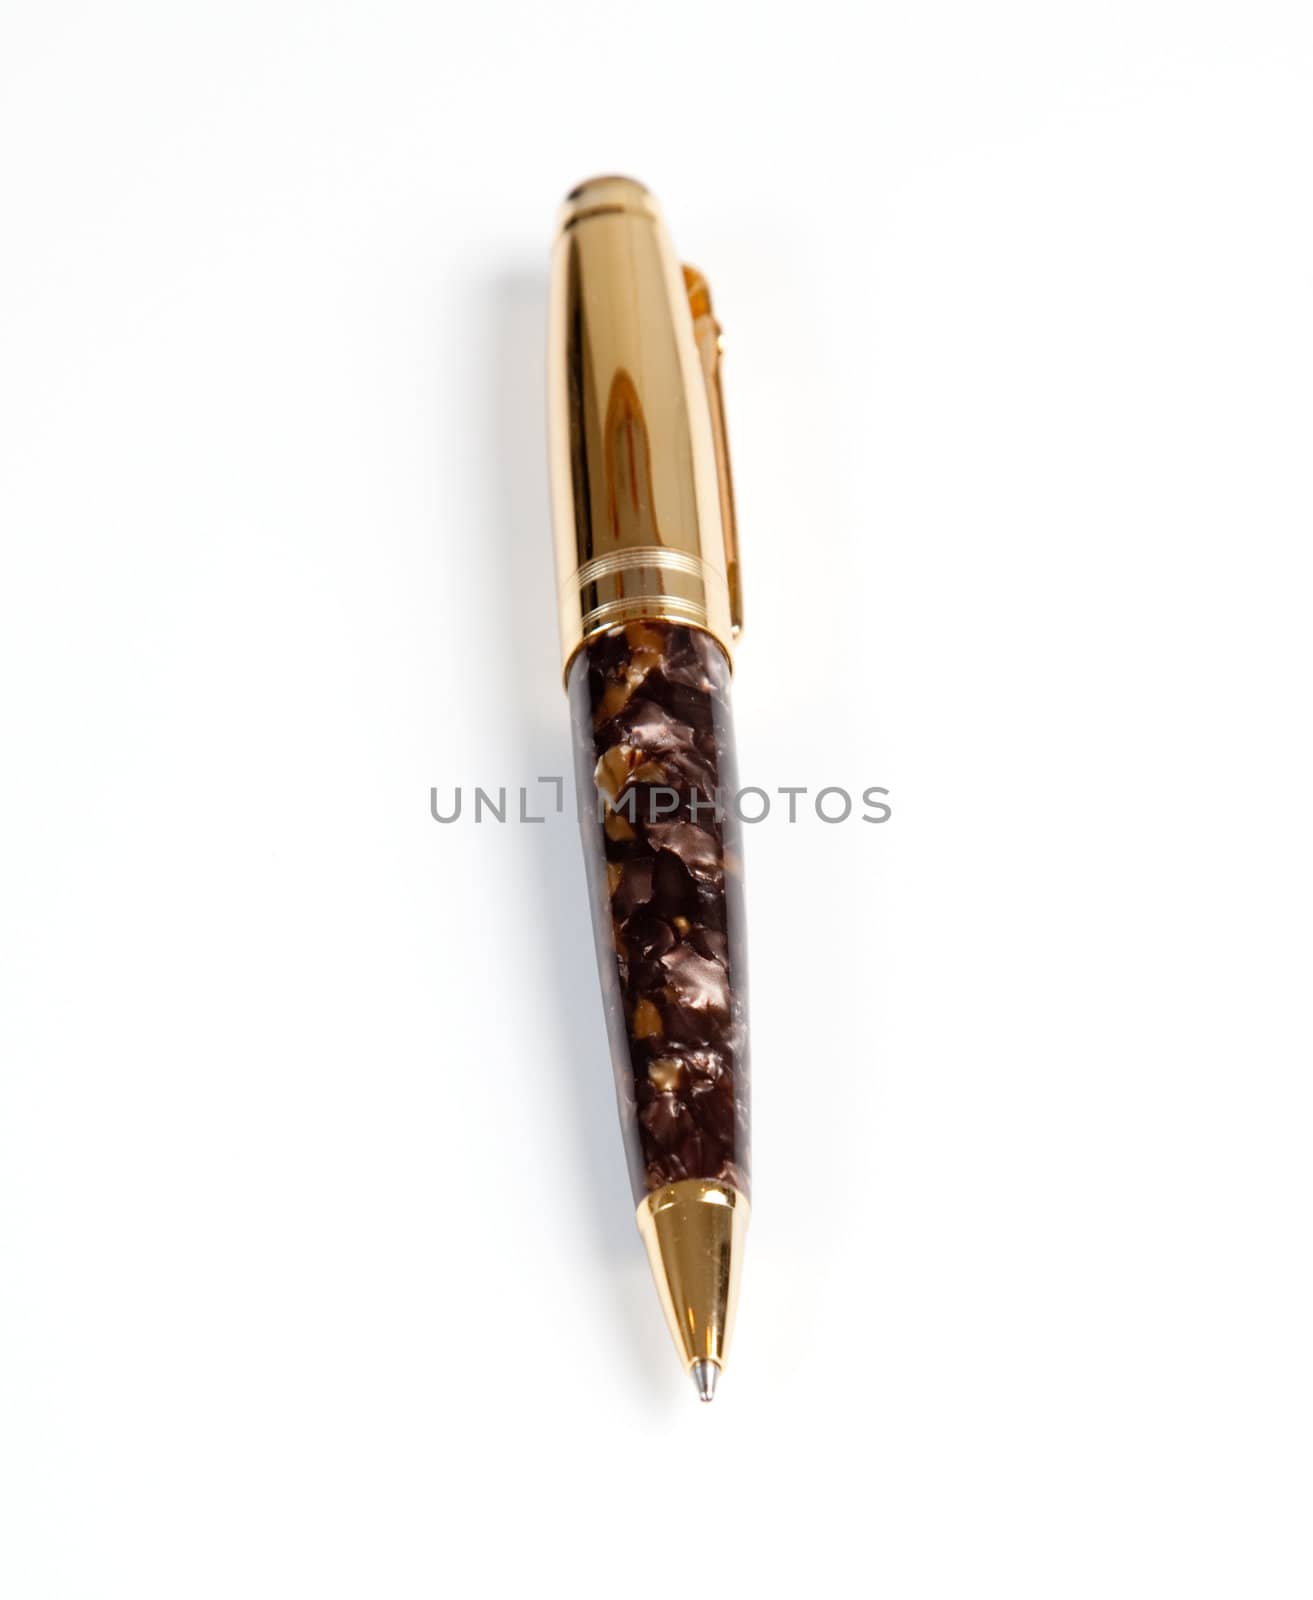 Ornate gold ball point pen isolated against white